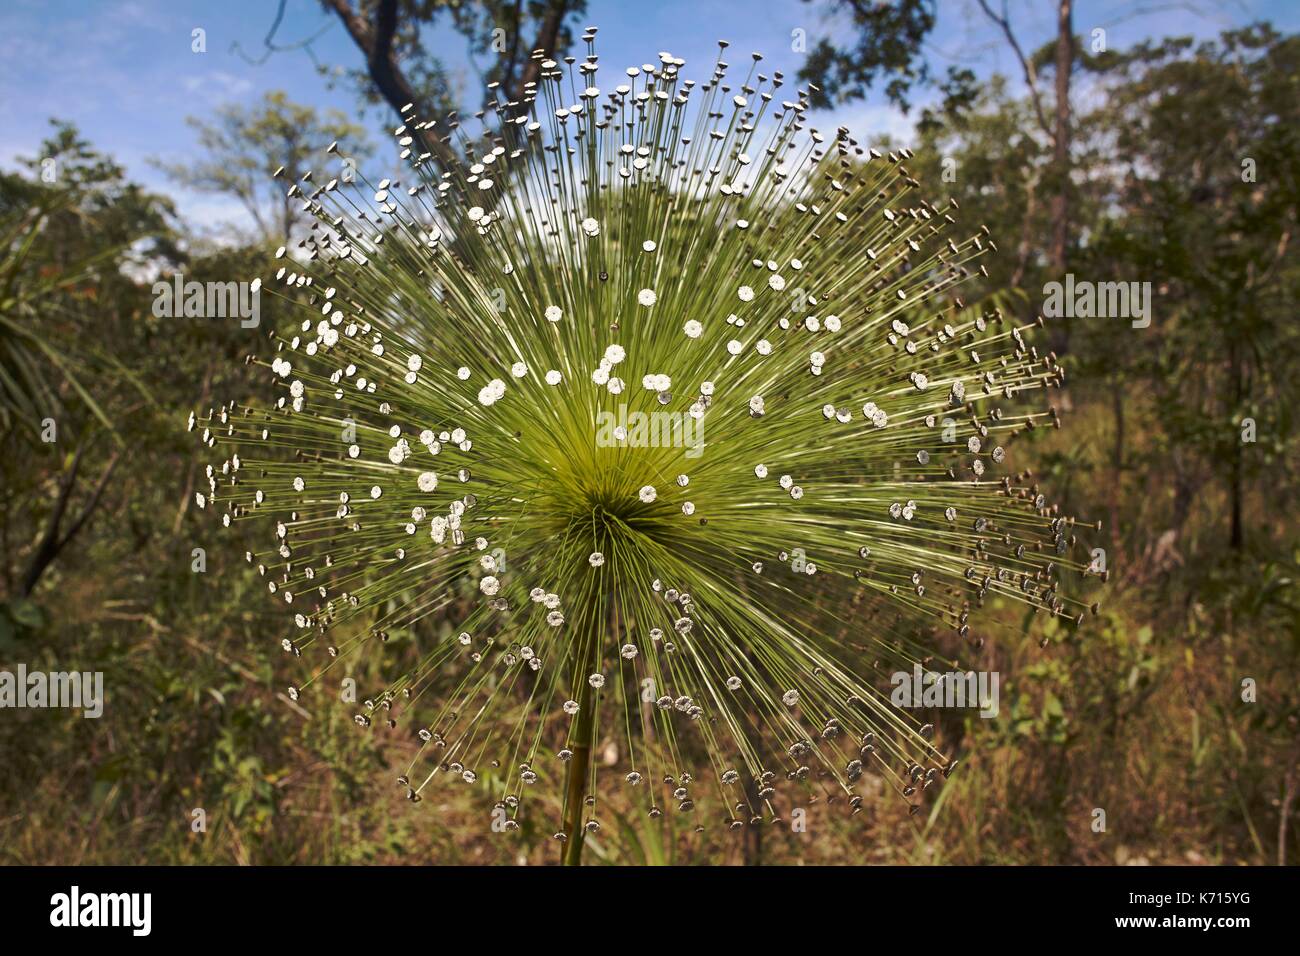 Brazil, Goias, Chapada dos Veadeiros National Park, Wildflower iconic of Cerrado, Eriocaulacae, Chuveirinho flower (Paepalanthus sp) Stock Photo